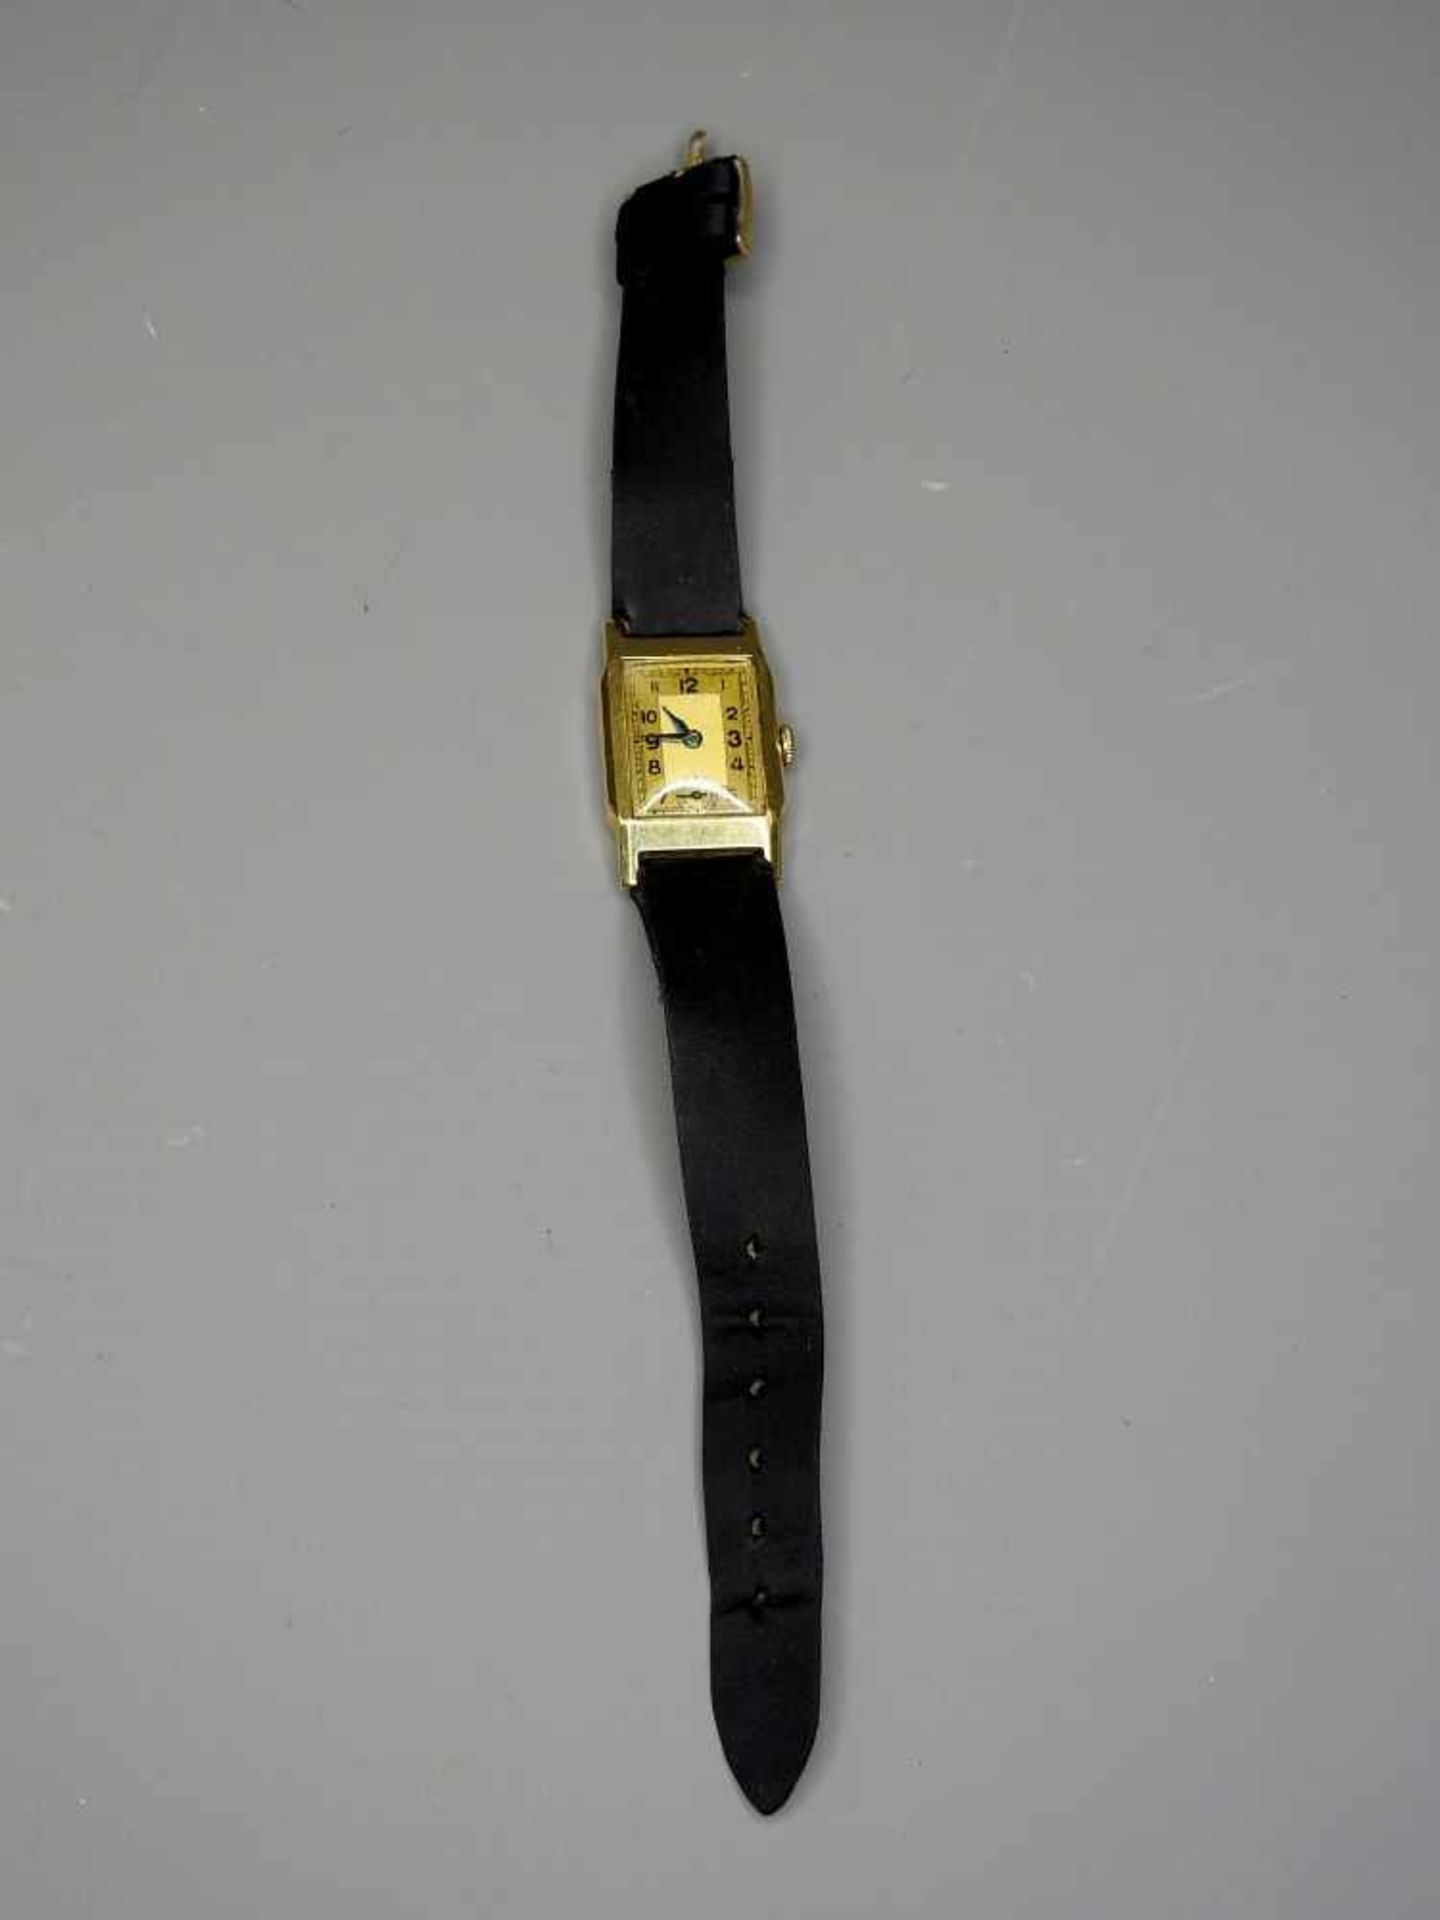 Damen Armbanduhr14 K. Gelbgold mit Handaufzug. Gangbar. Deutschland, um 1930. H x B Ziffernblatt ca.